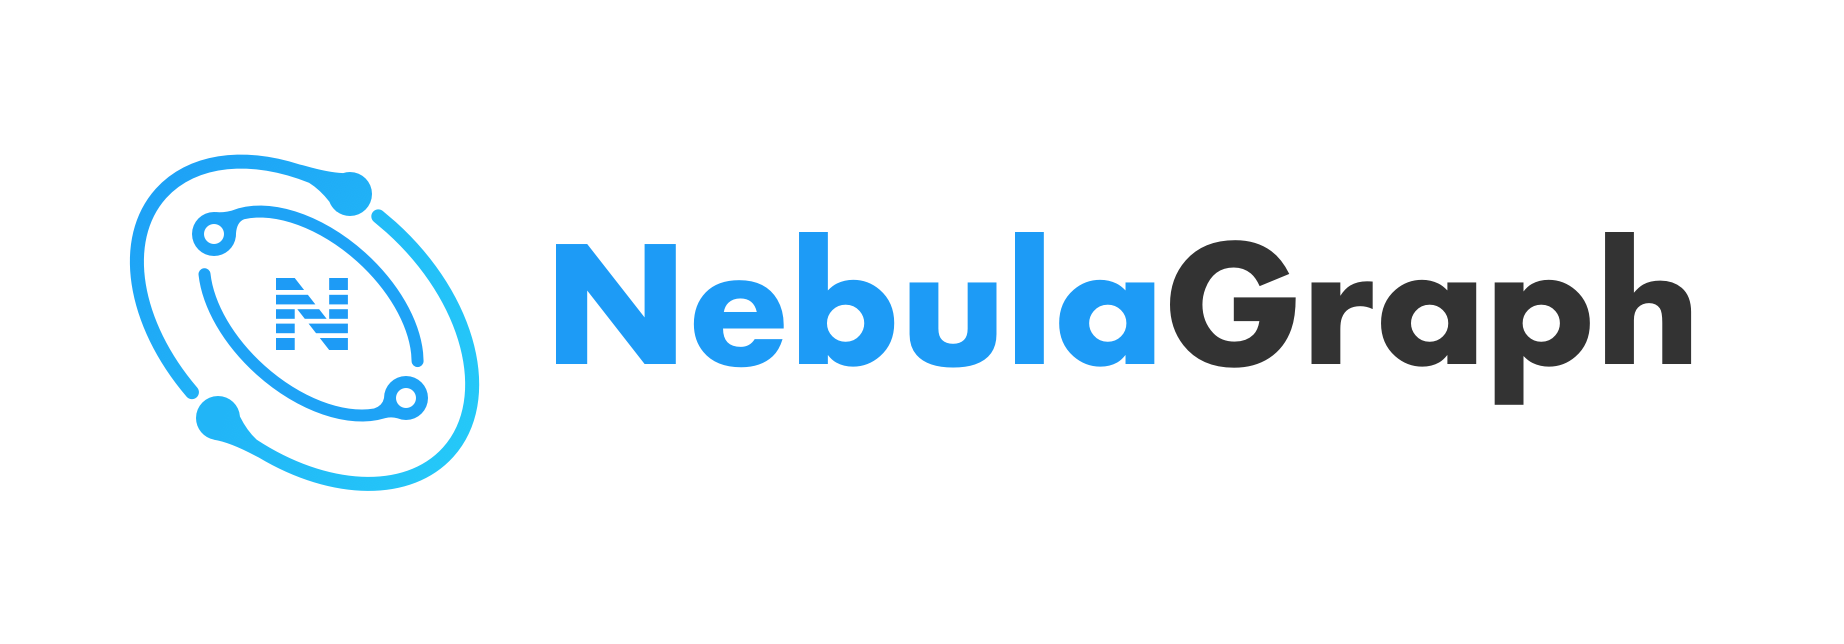 NebulaGraph Community